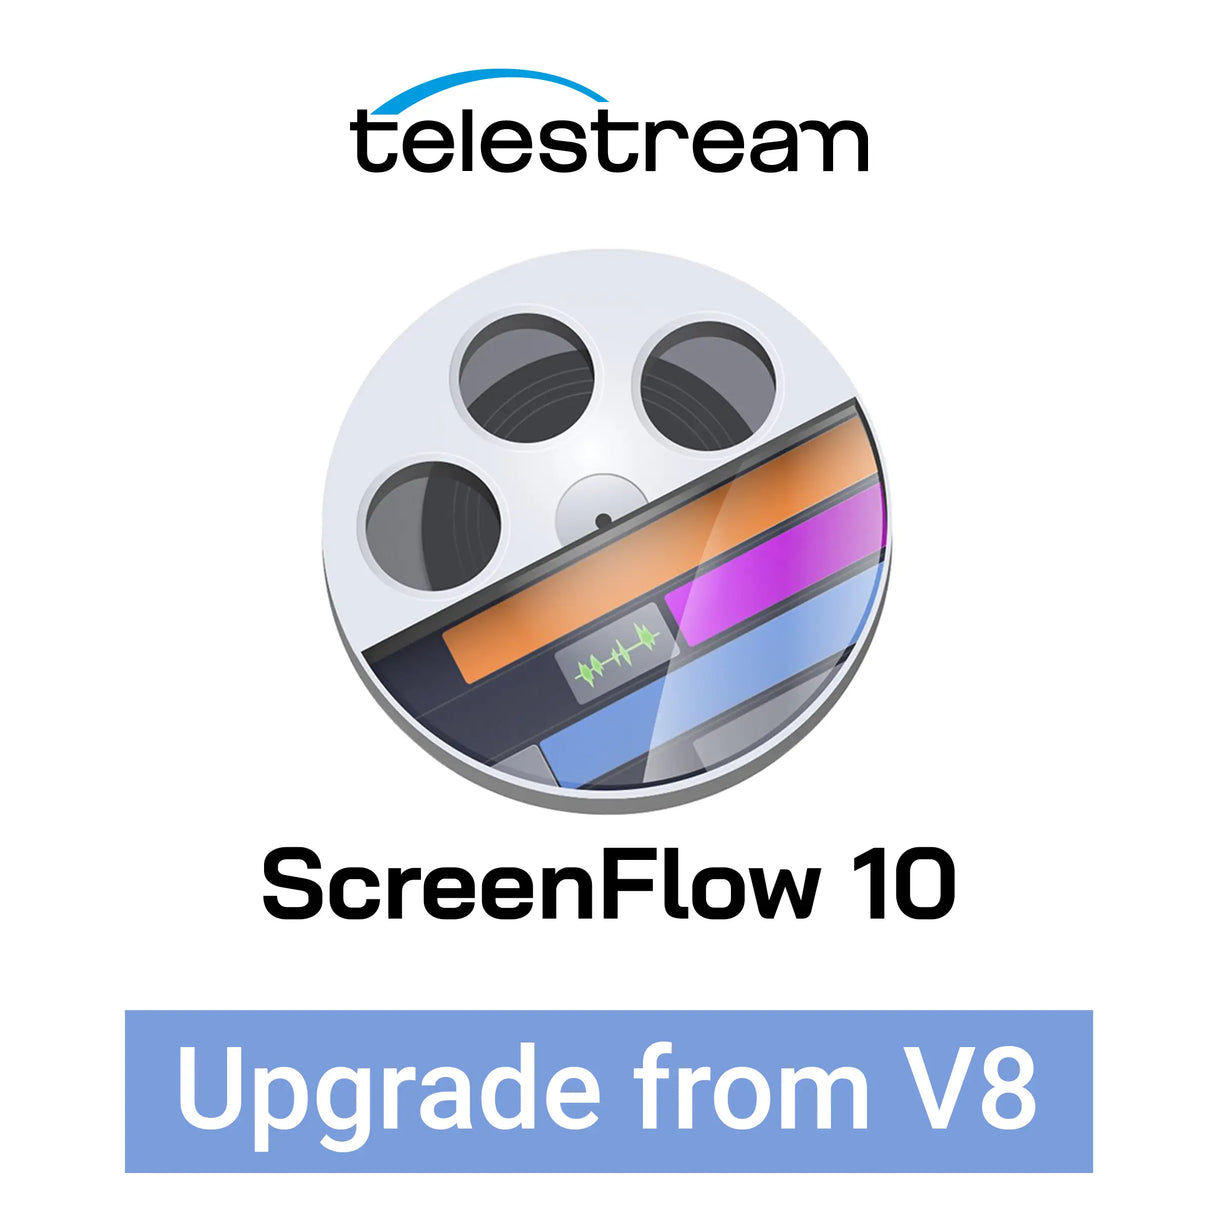 Telestream ScreenFlow 10 Video Editing Software Upgrade from V8